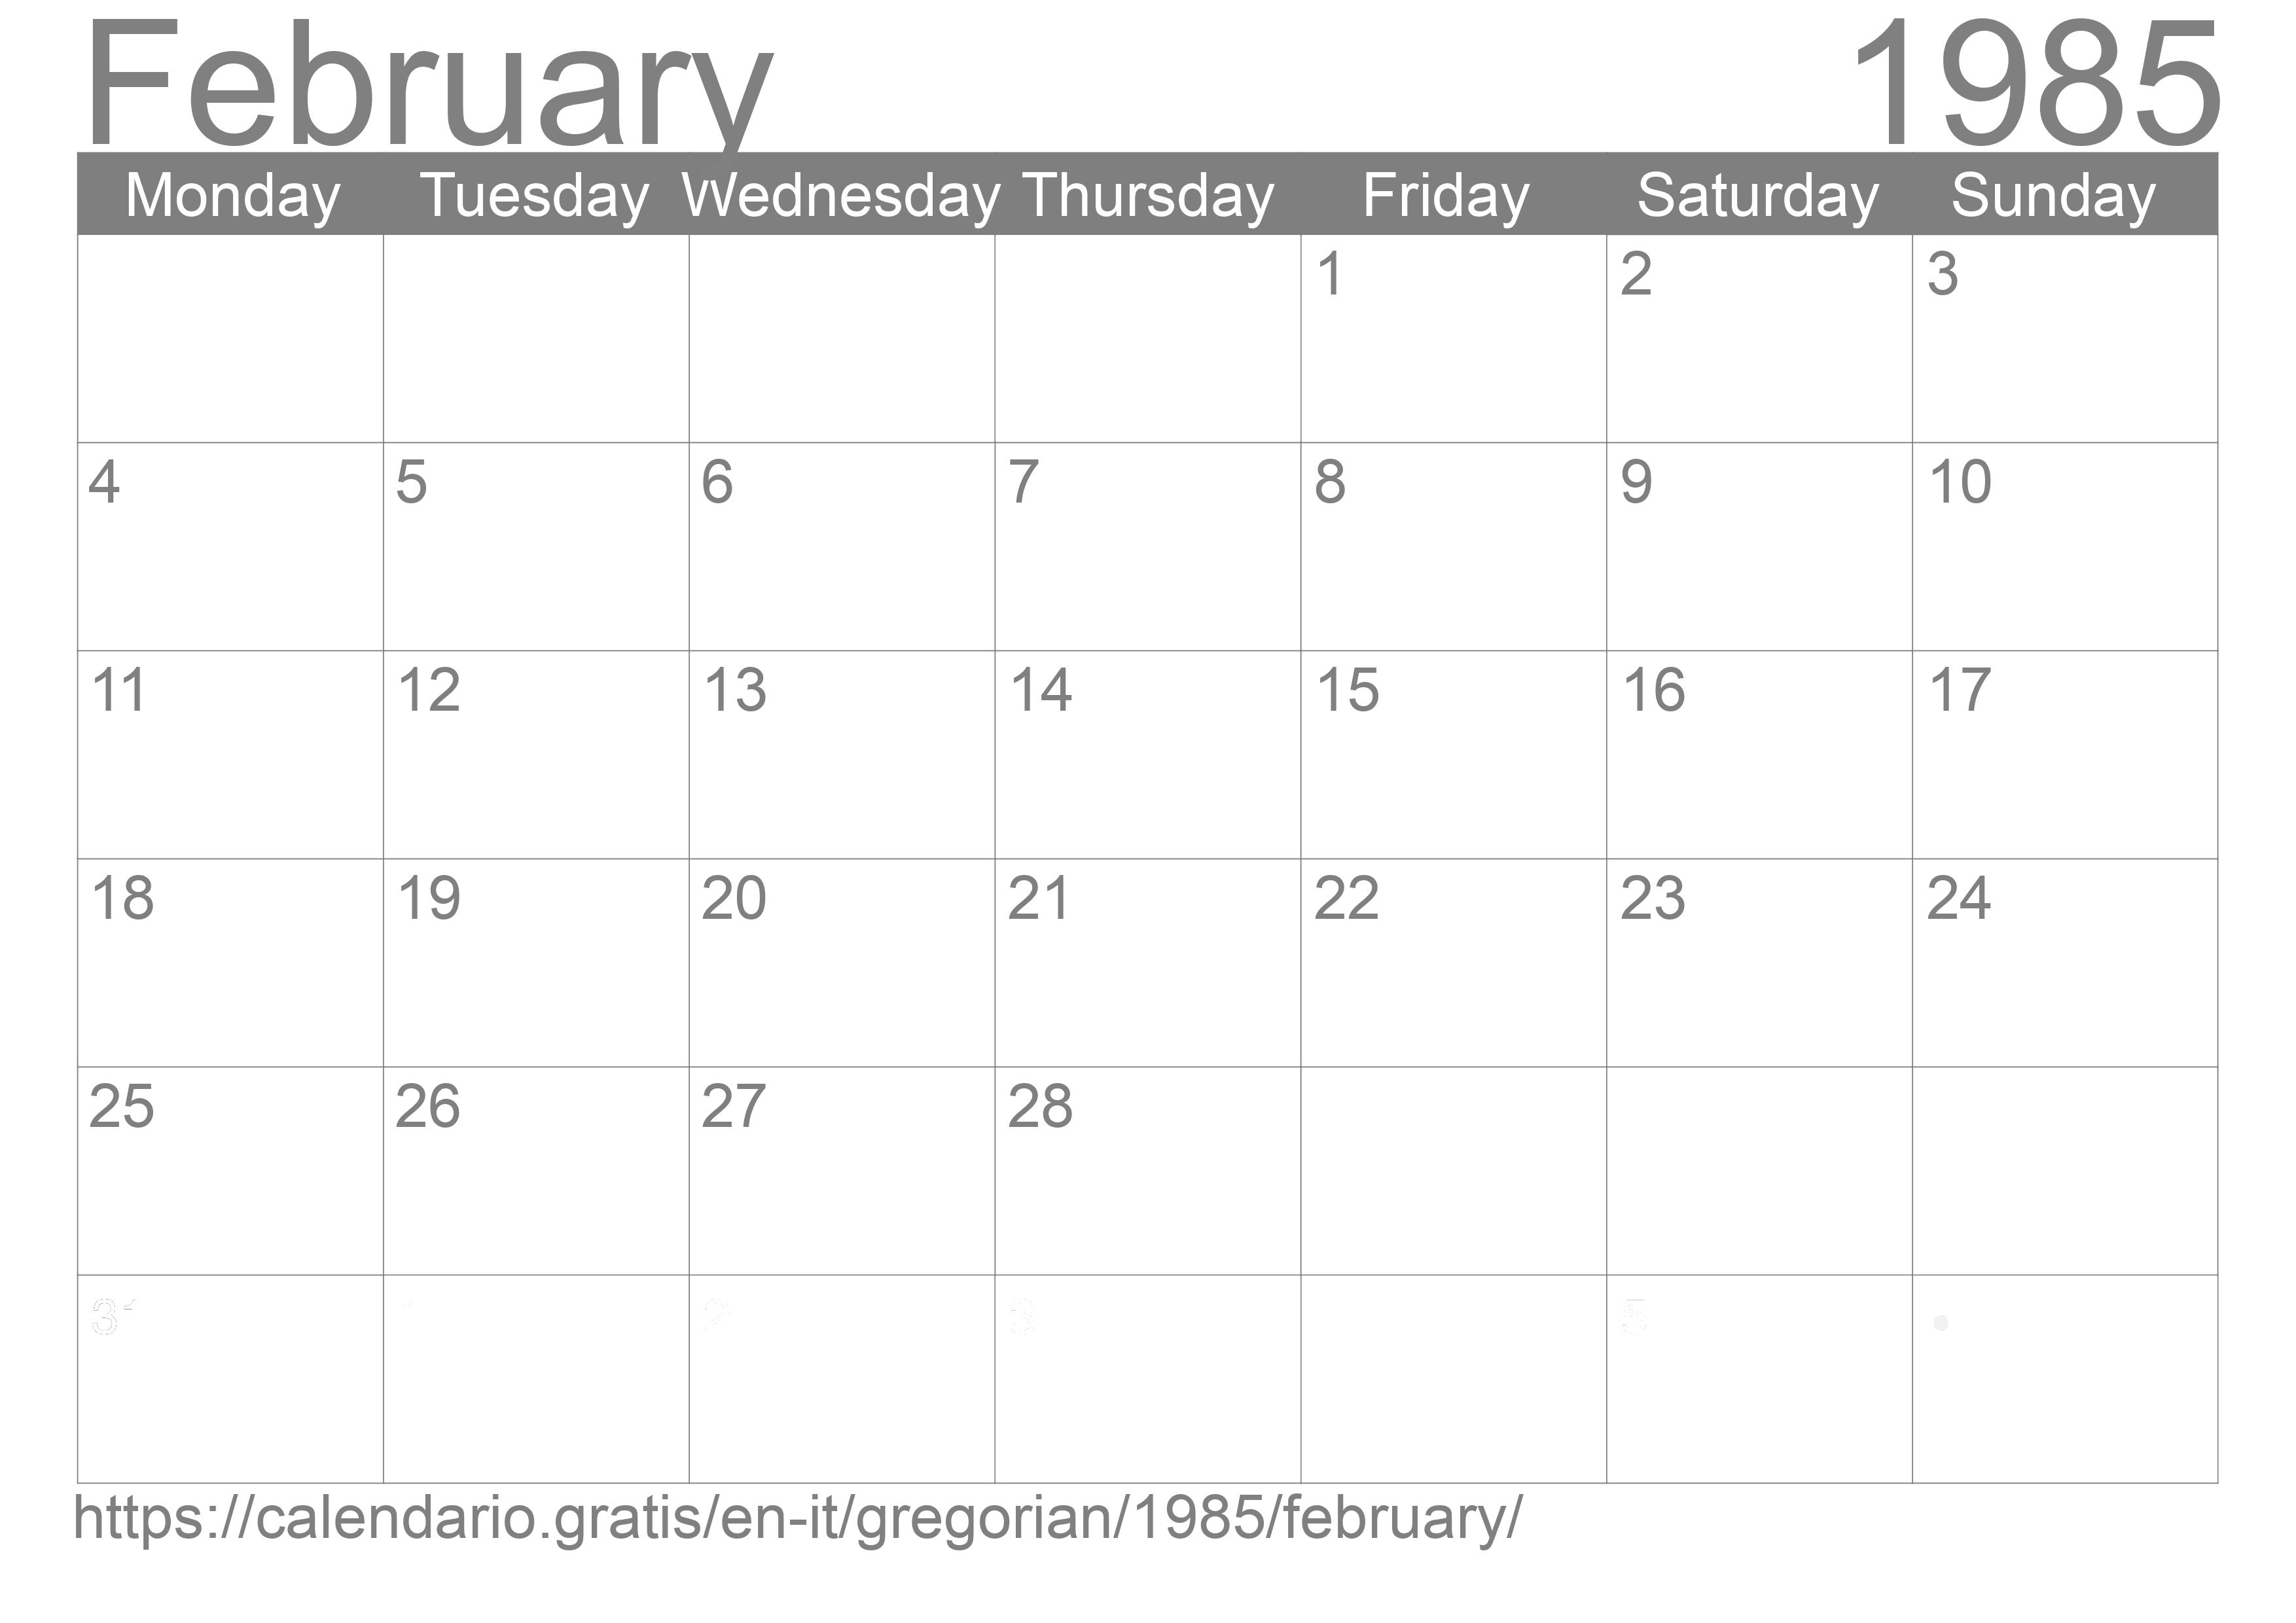 Calendar February 1985 to print